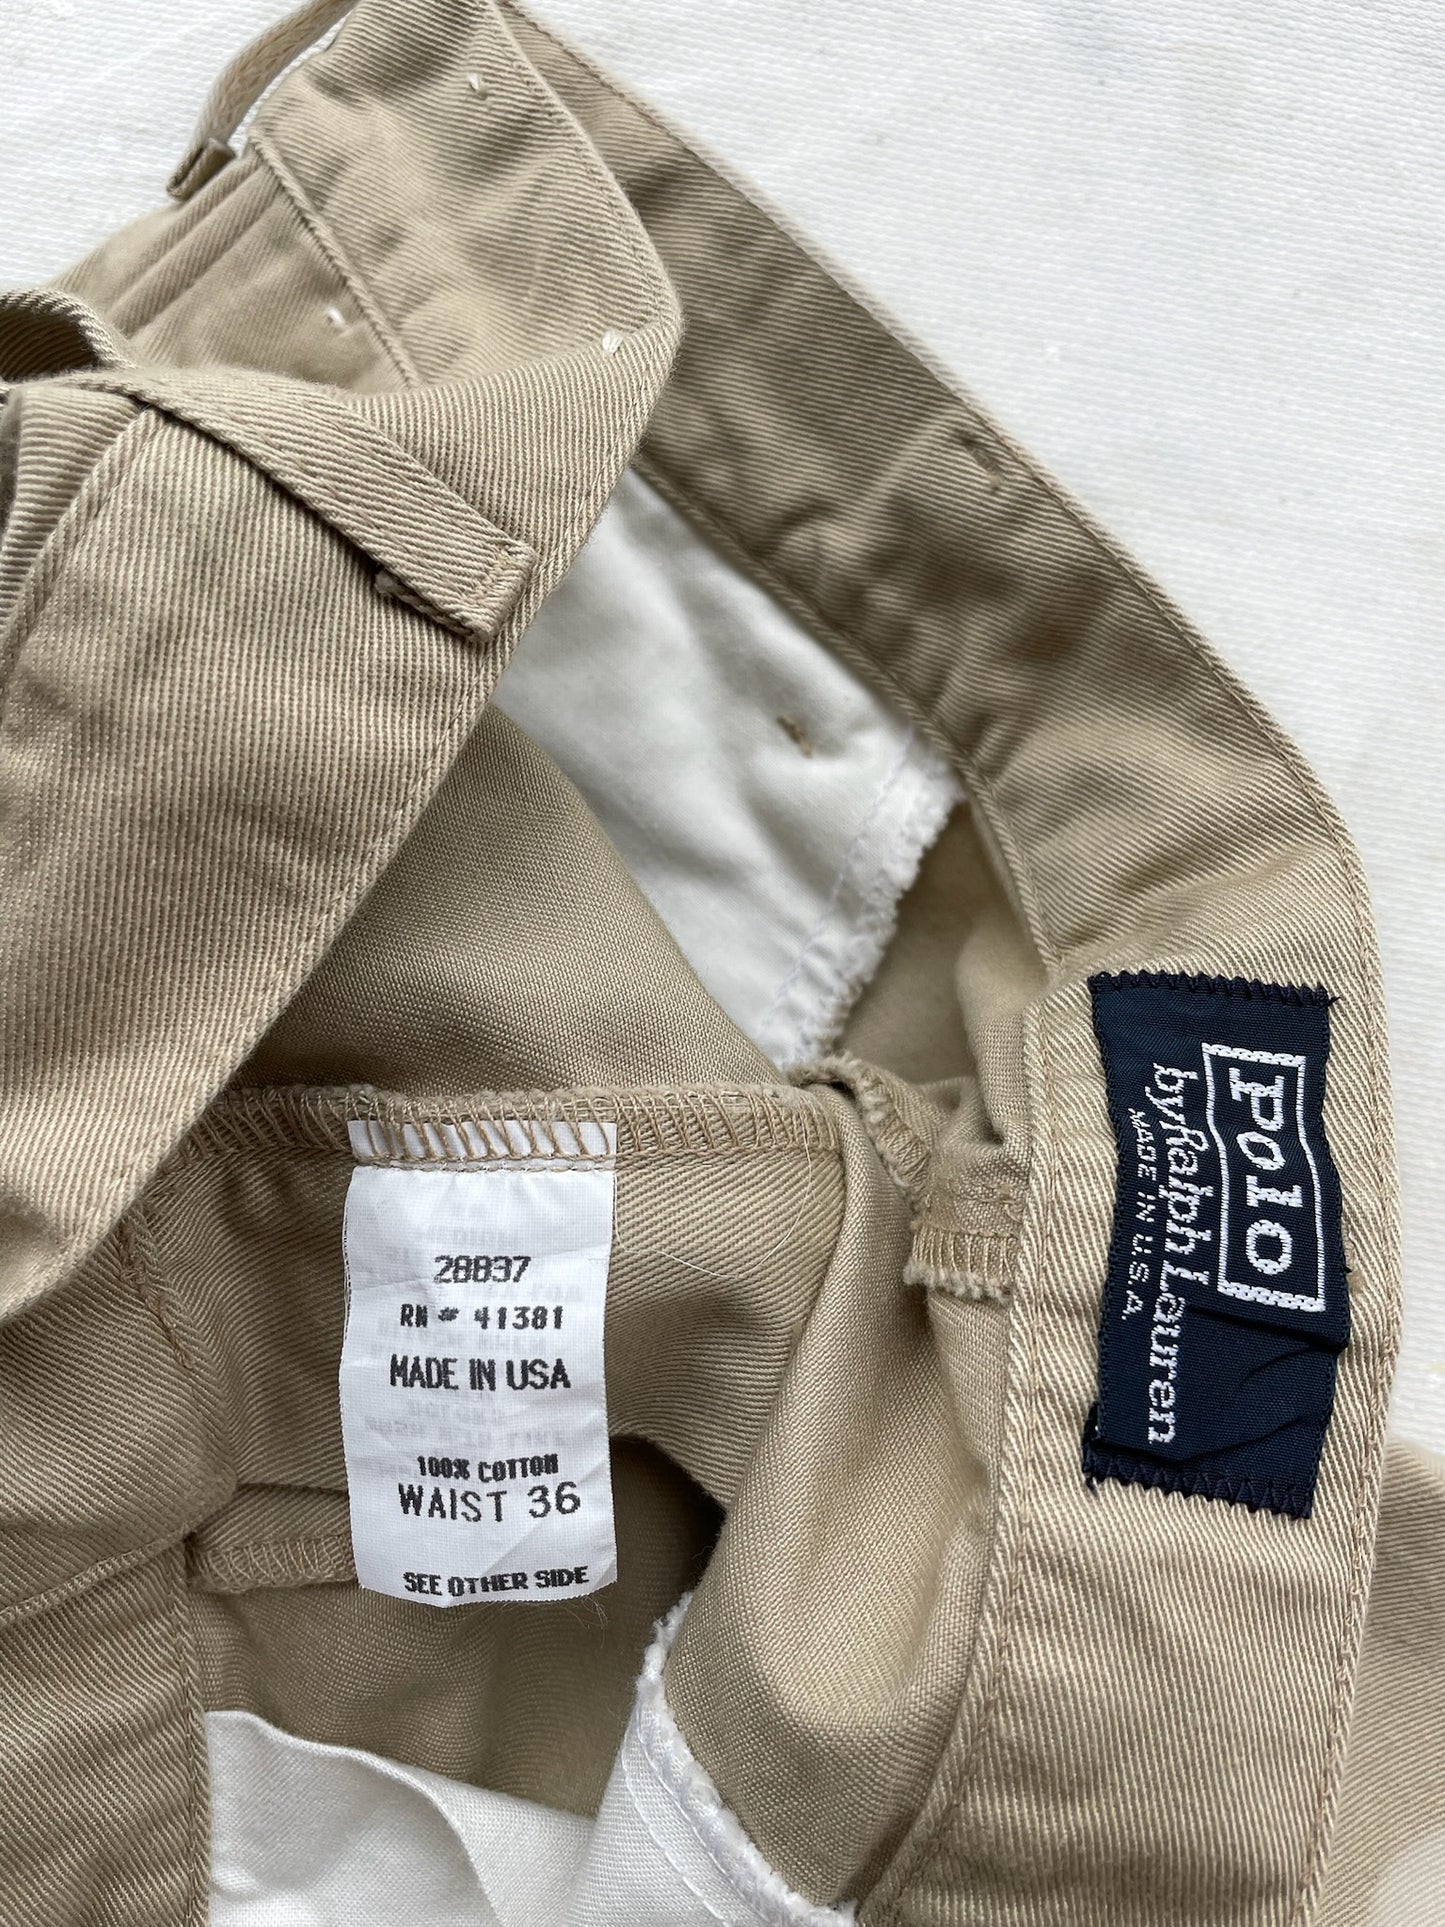 Polo Ralph Lauren Pleated Khaki Shorts—[34]